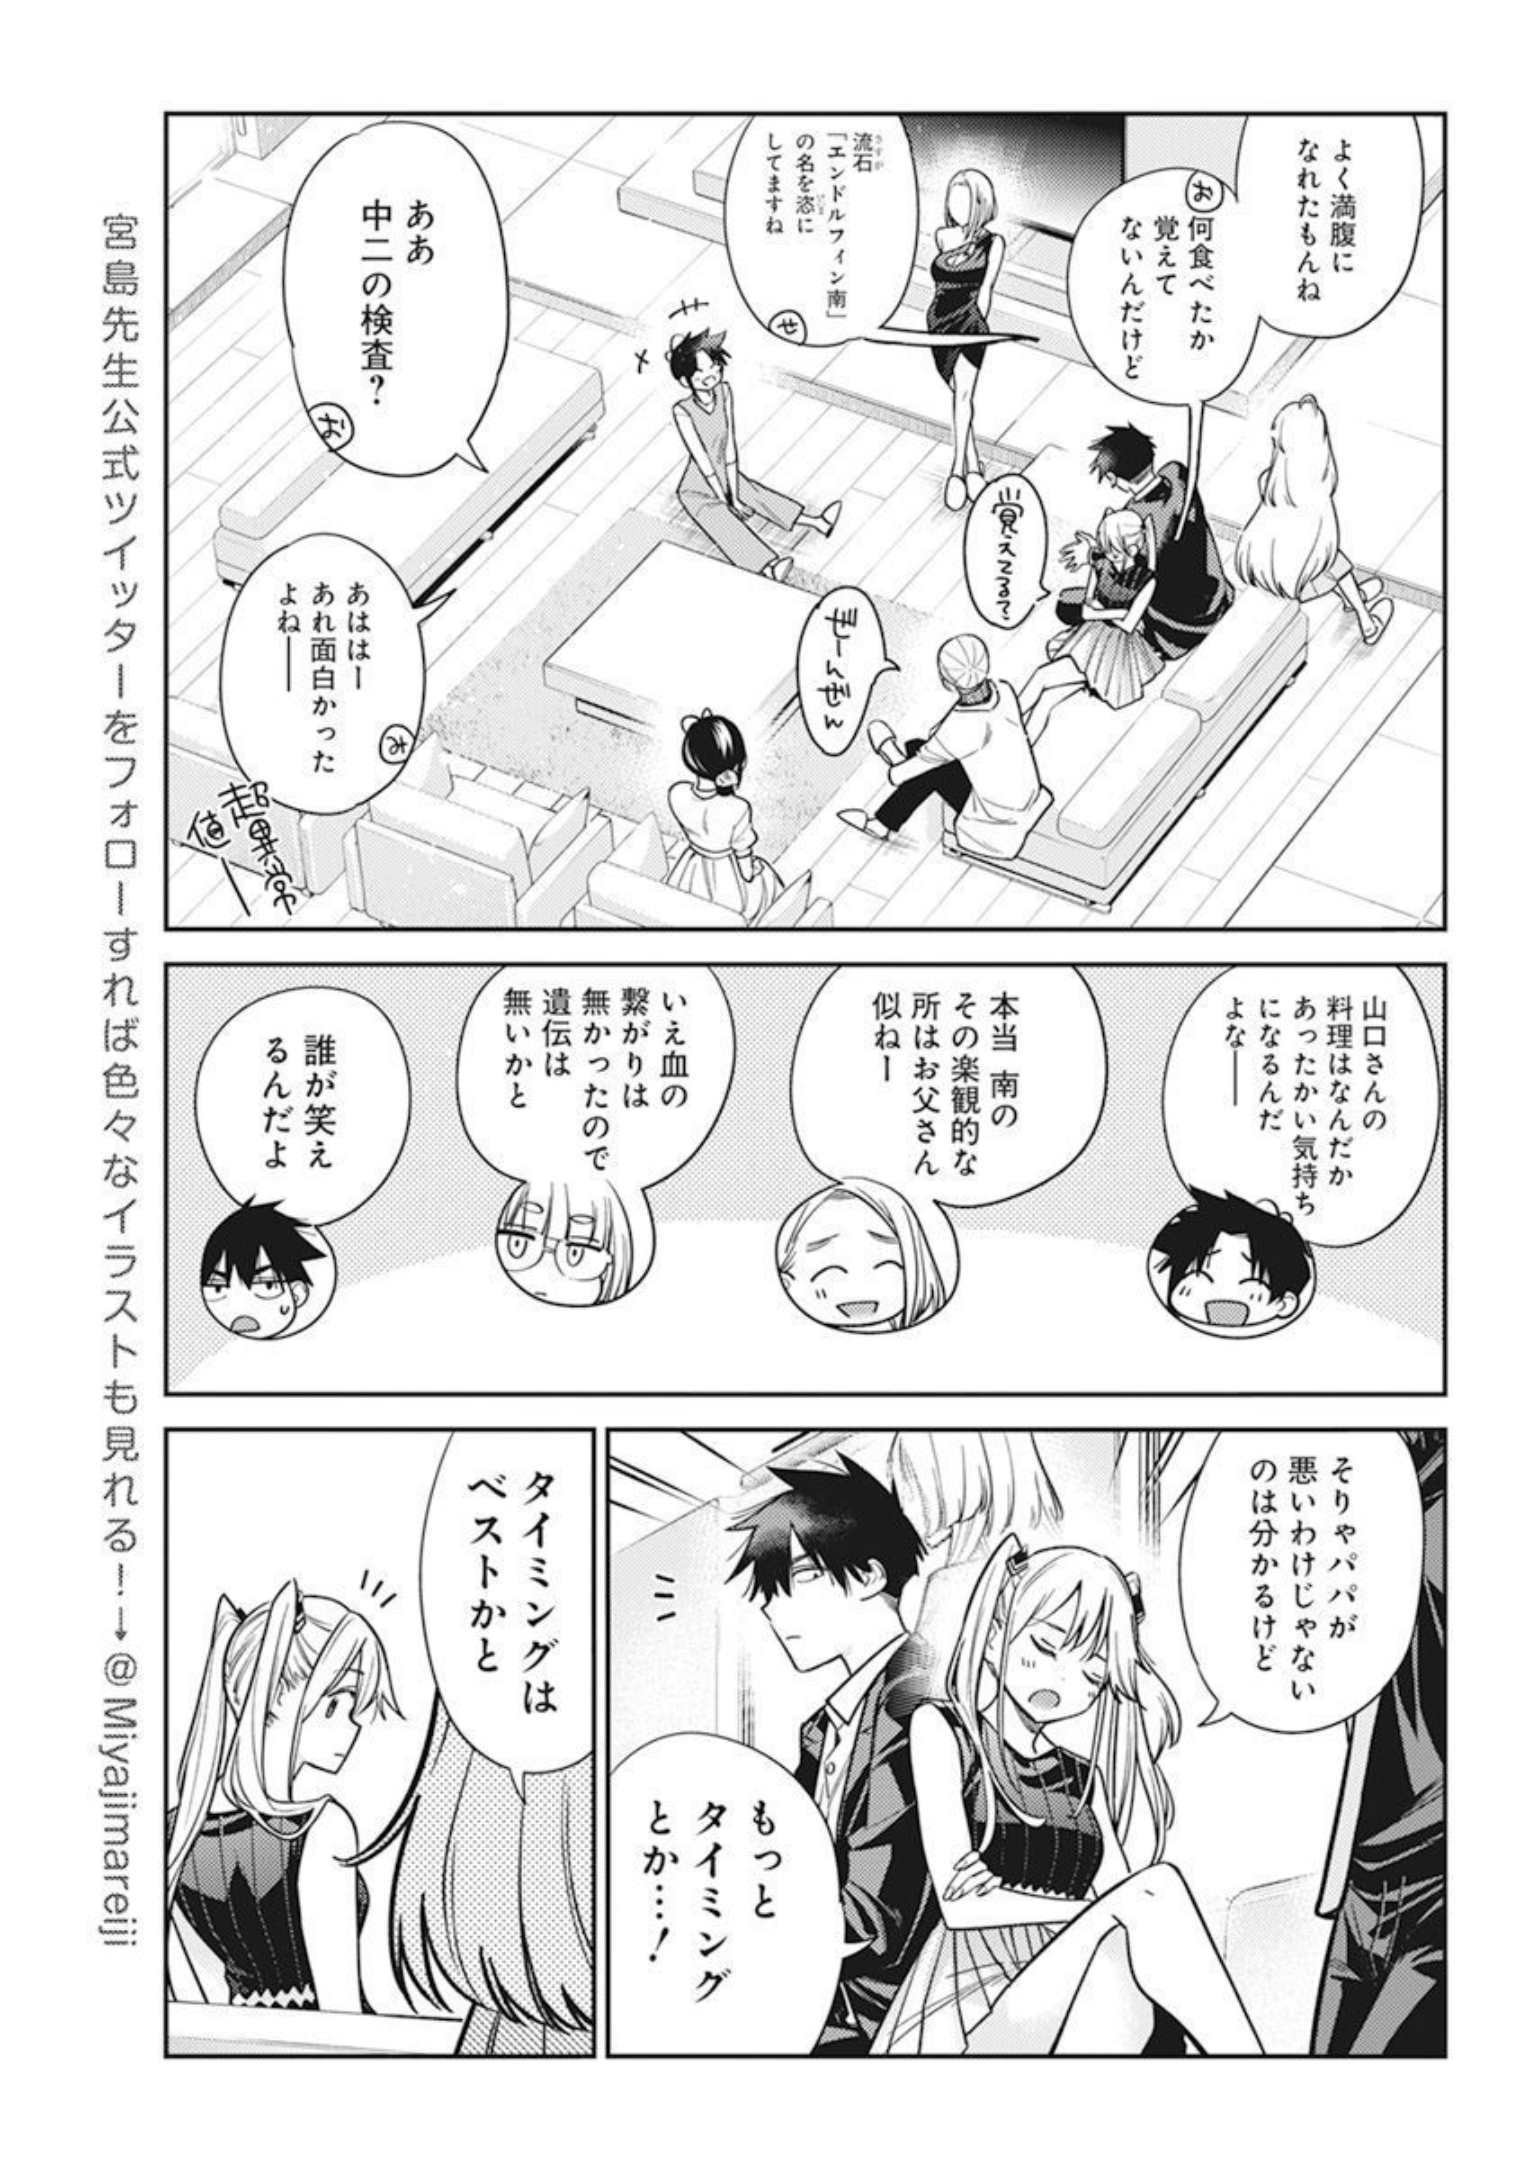 Shiunji-ke no Kodomotachi (Children of the Shiunji Family) - Chapter 02 - Page 14